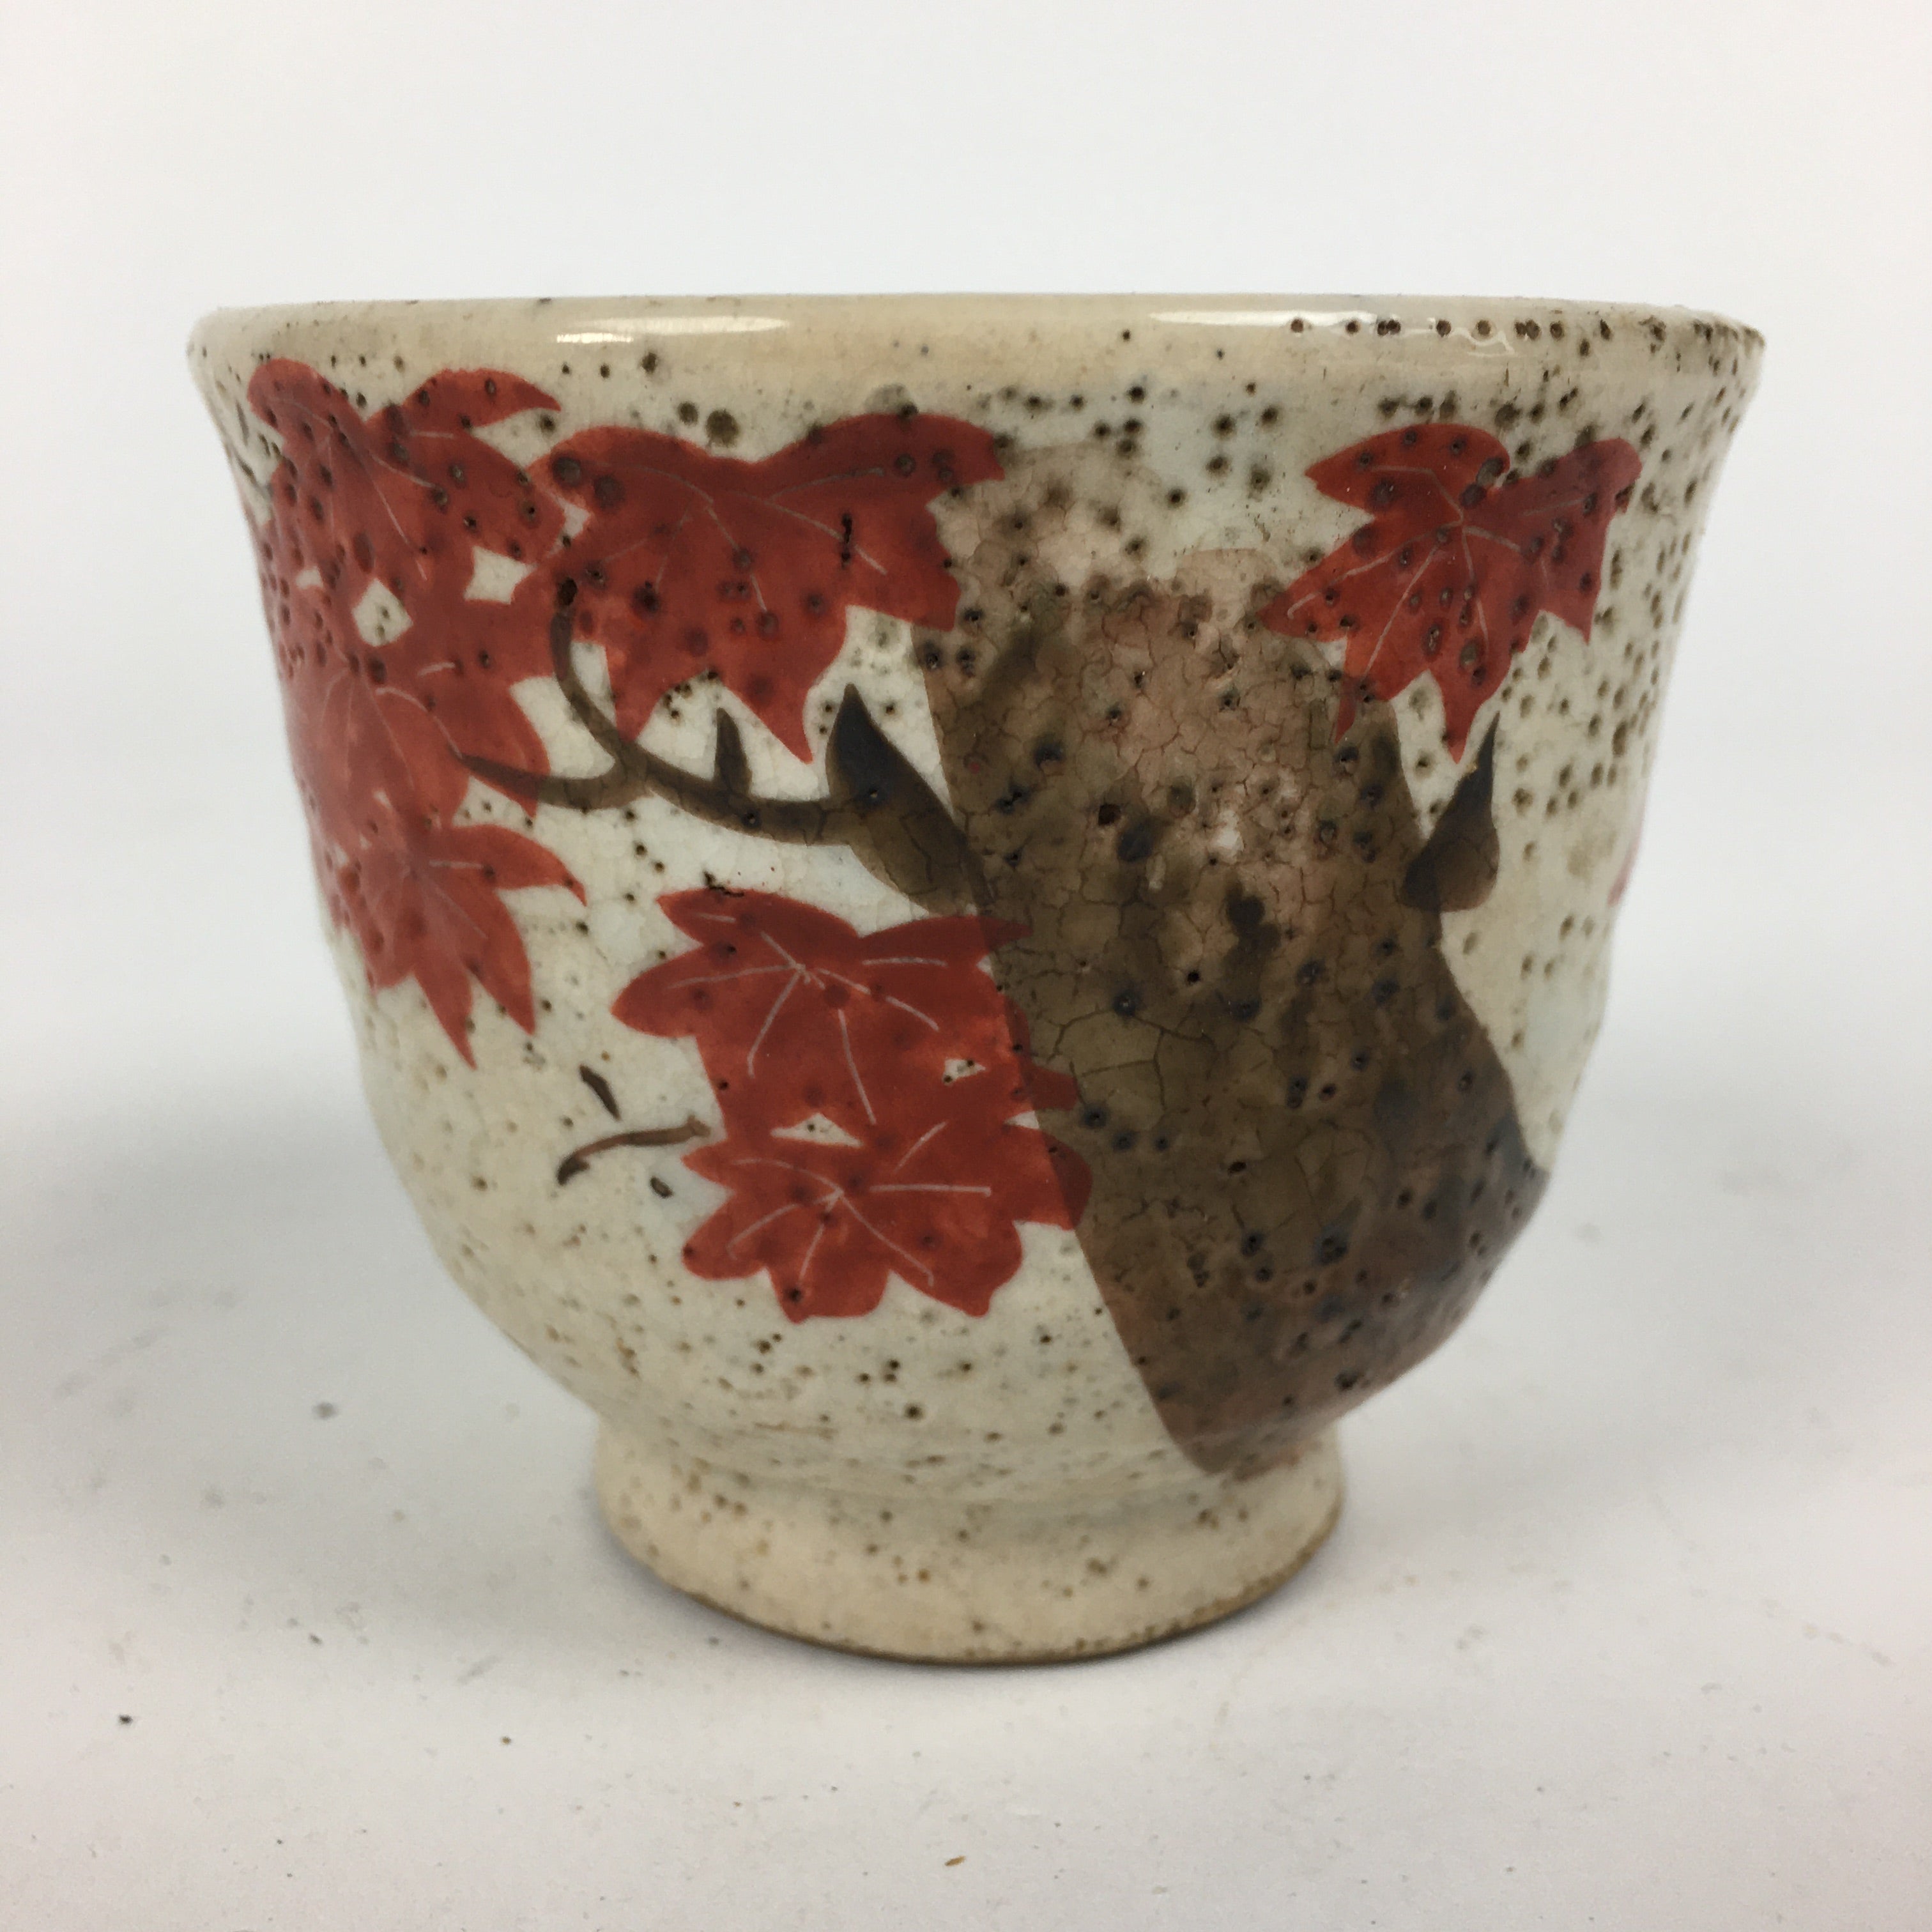 Japanese Ceramic Teacup Yunomi Vtg White Japanese Maple Sencha TC283